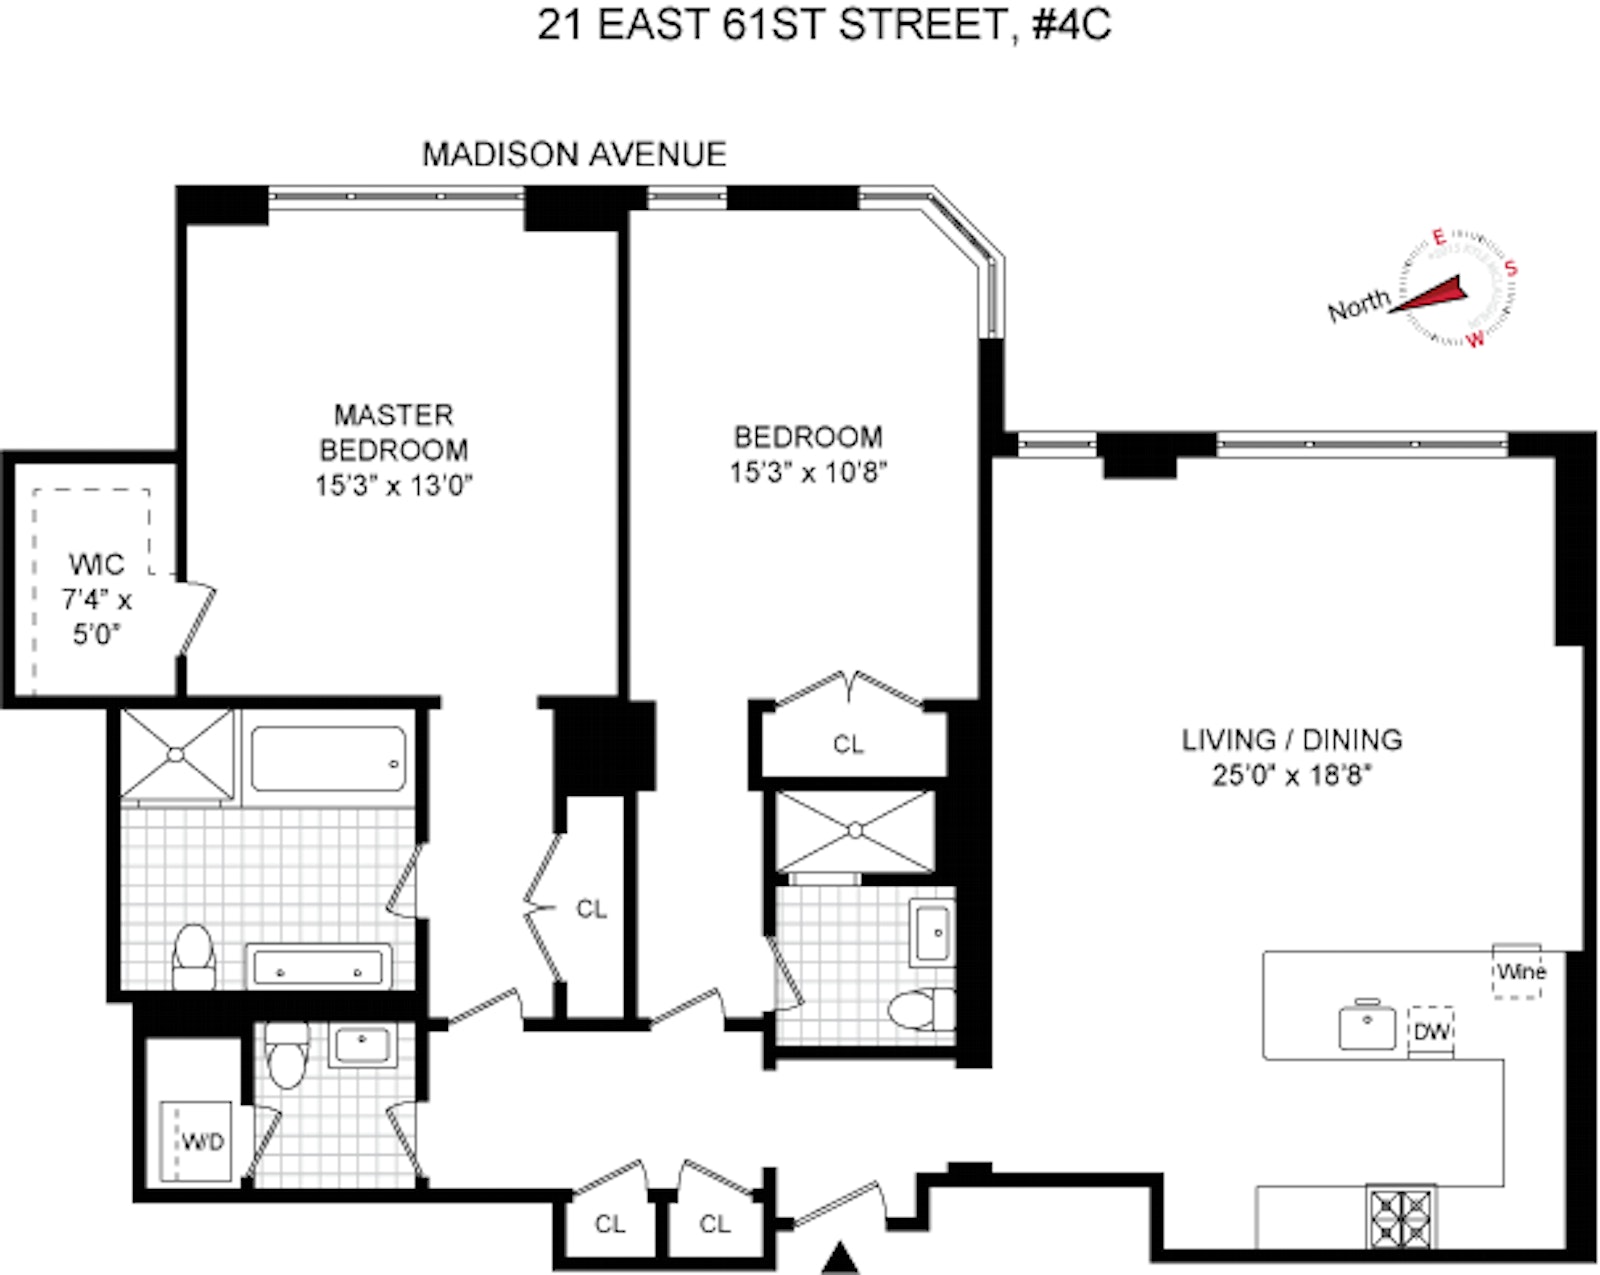 Floorplan for 21 East 61st Street, 4C